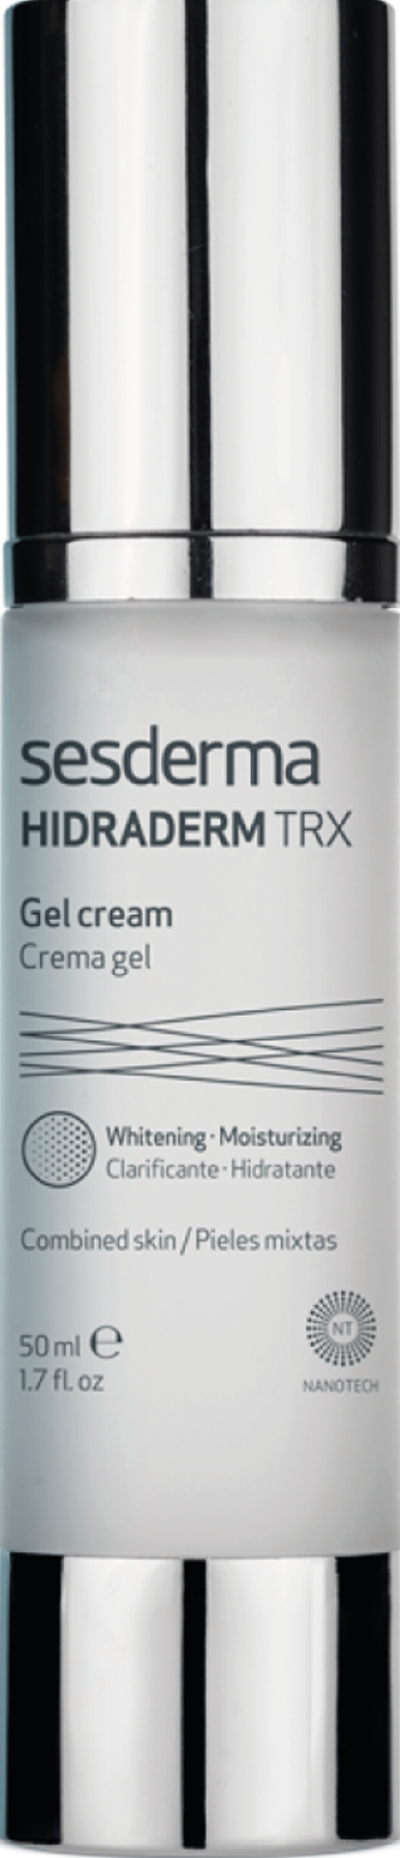 HIDRADERM TRX CREMA GEL Crema gel